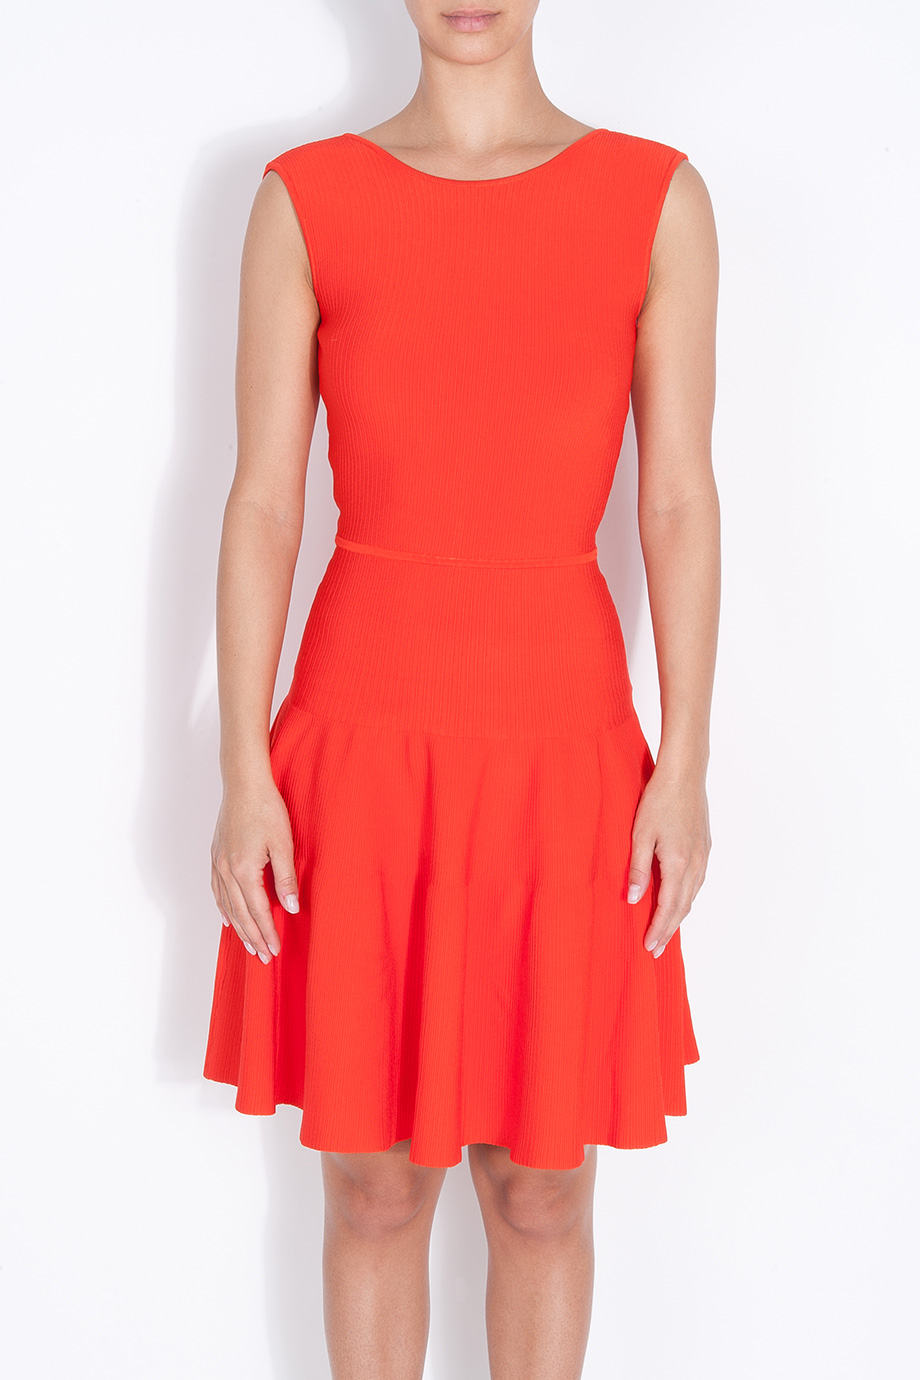 Issa Rib Cap Sleeveless Dress in Orange | Lyst